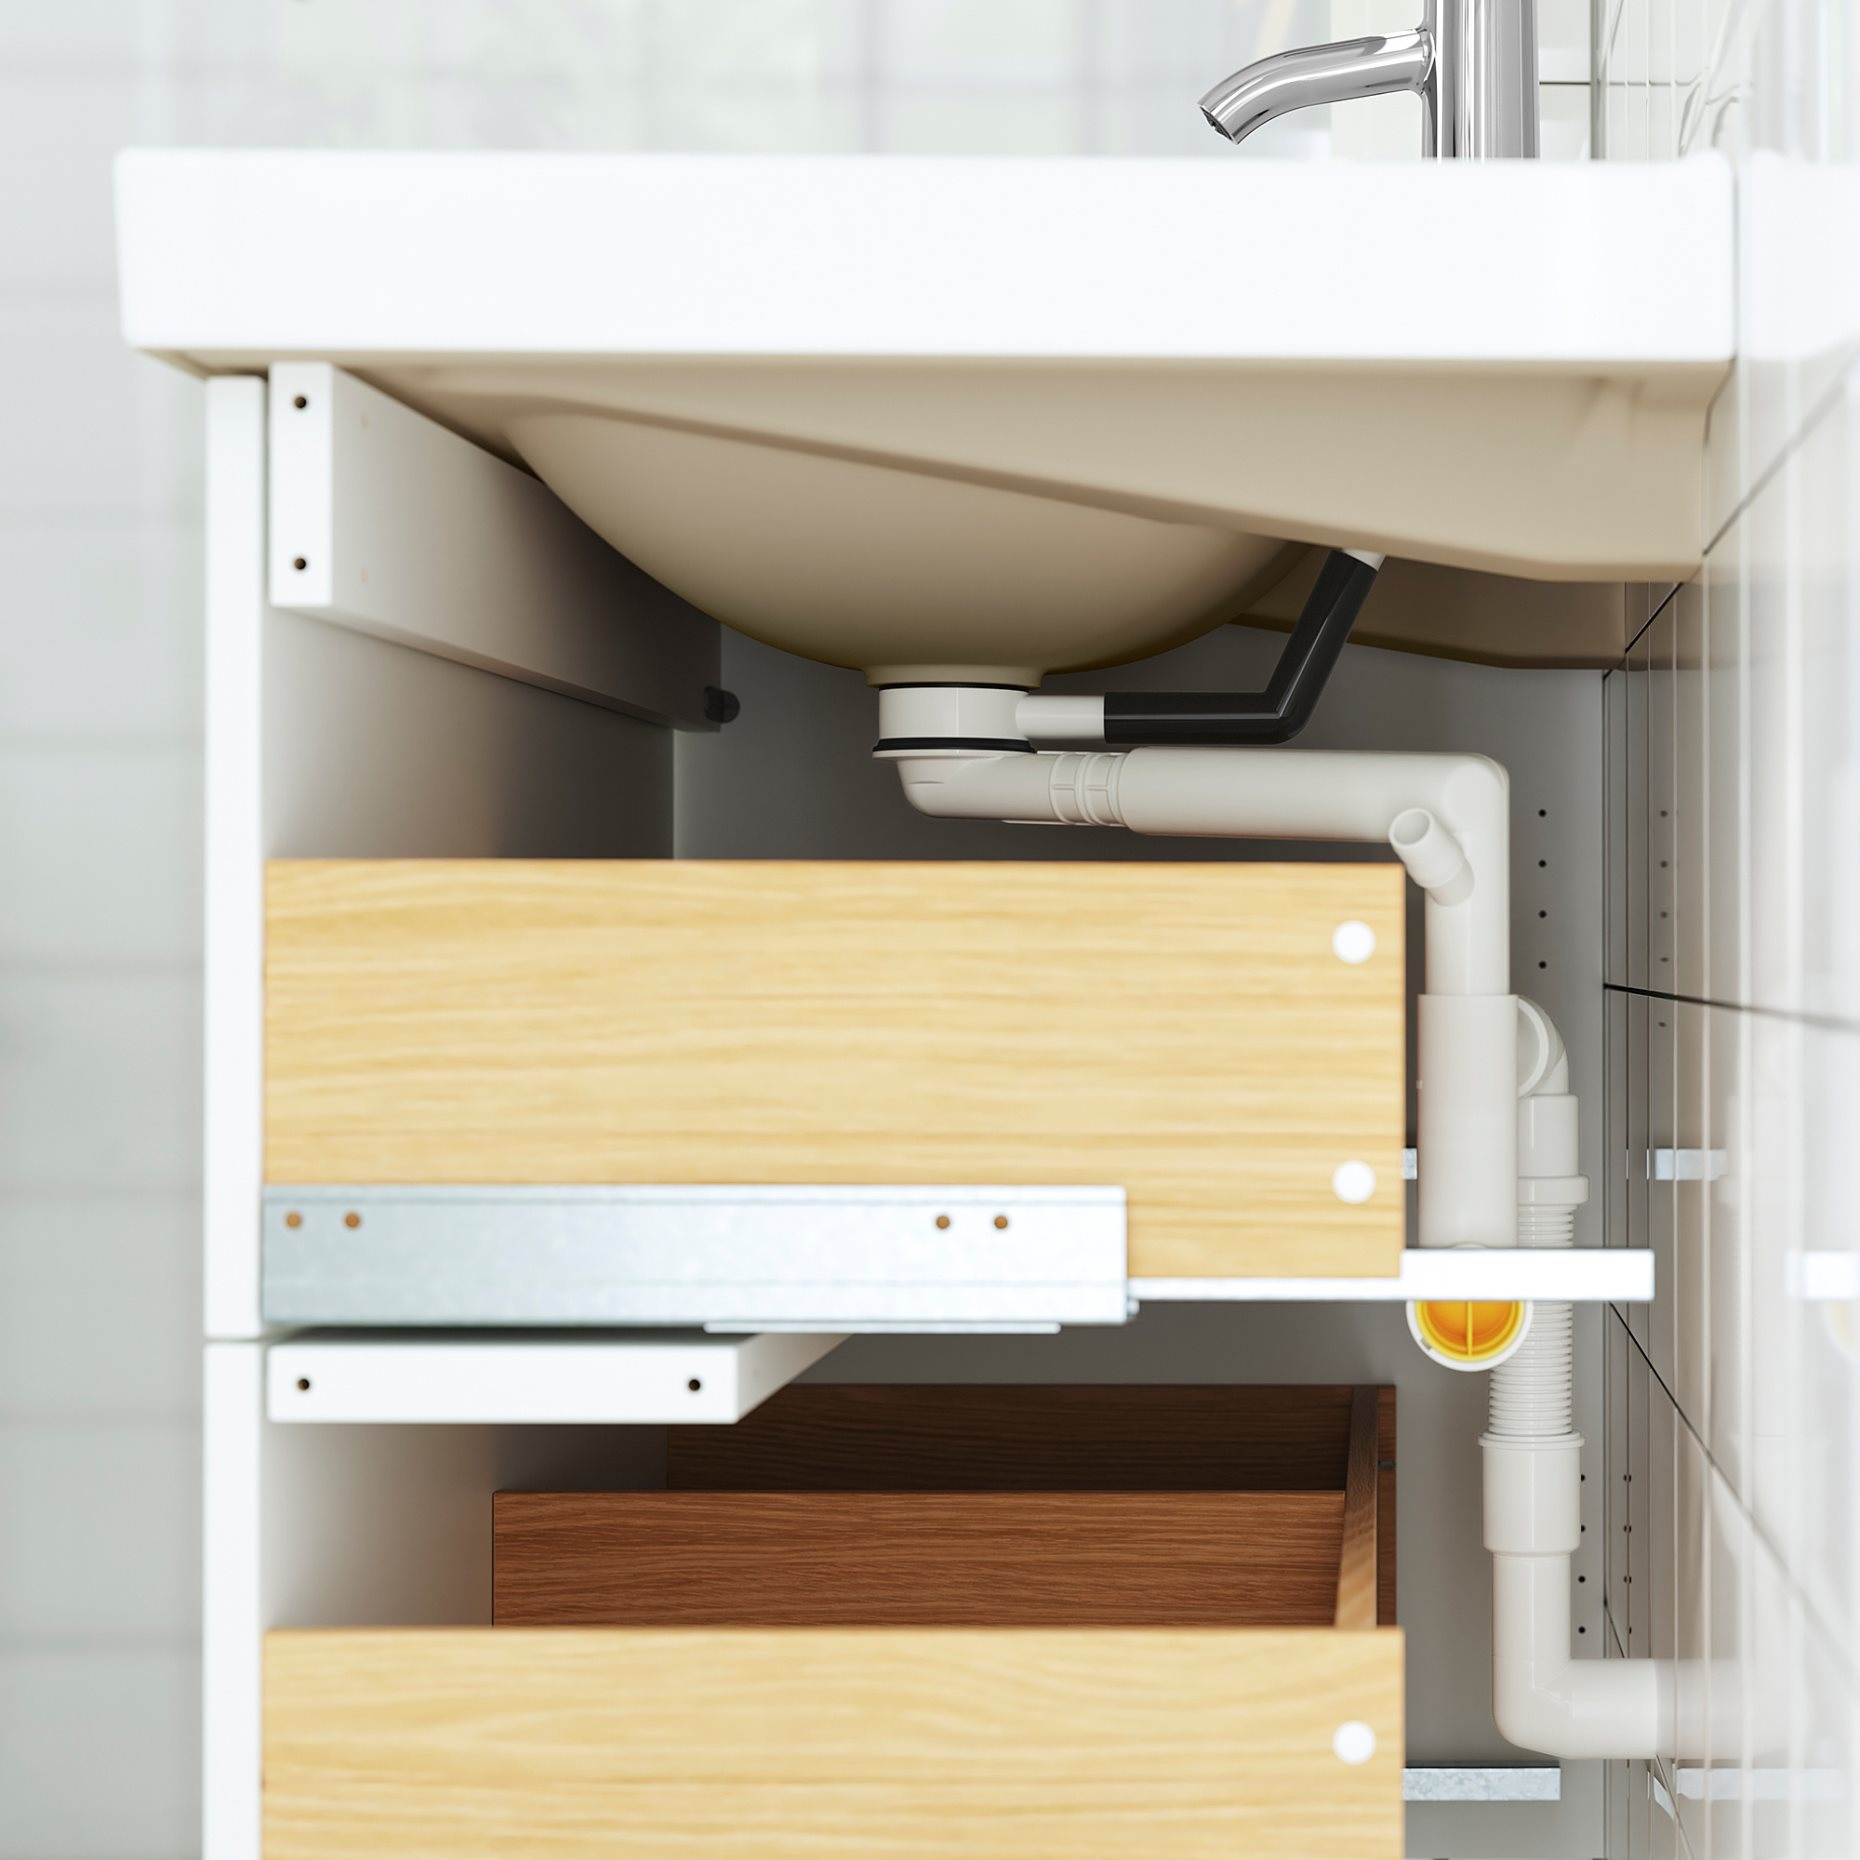 ANGSJON/BACKSJON, wash-stand with drawers/wash-basin/tap, 102x49x71 cm, 495.215.98